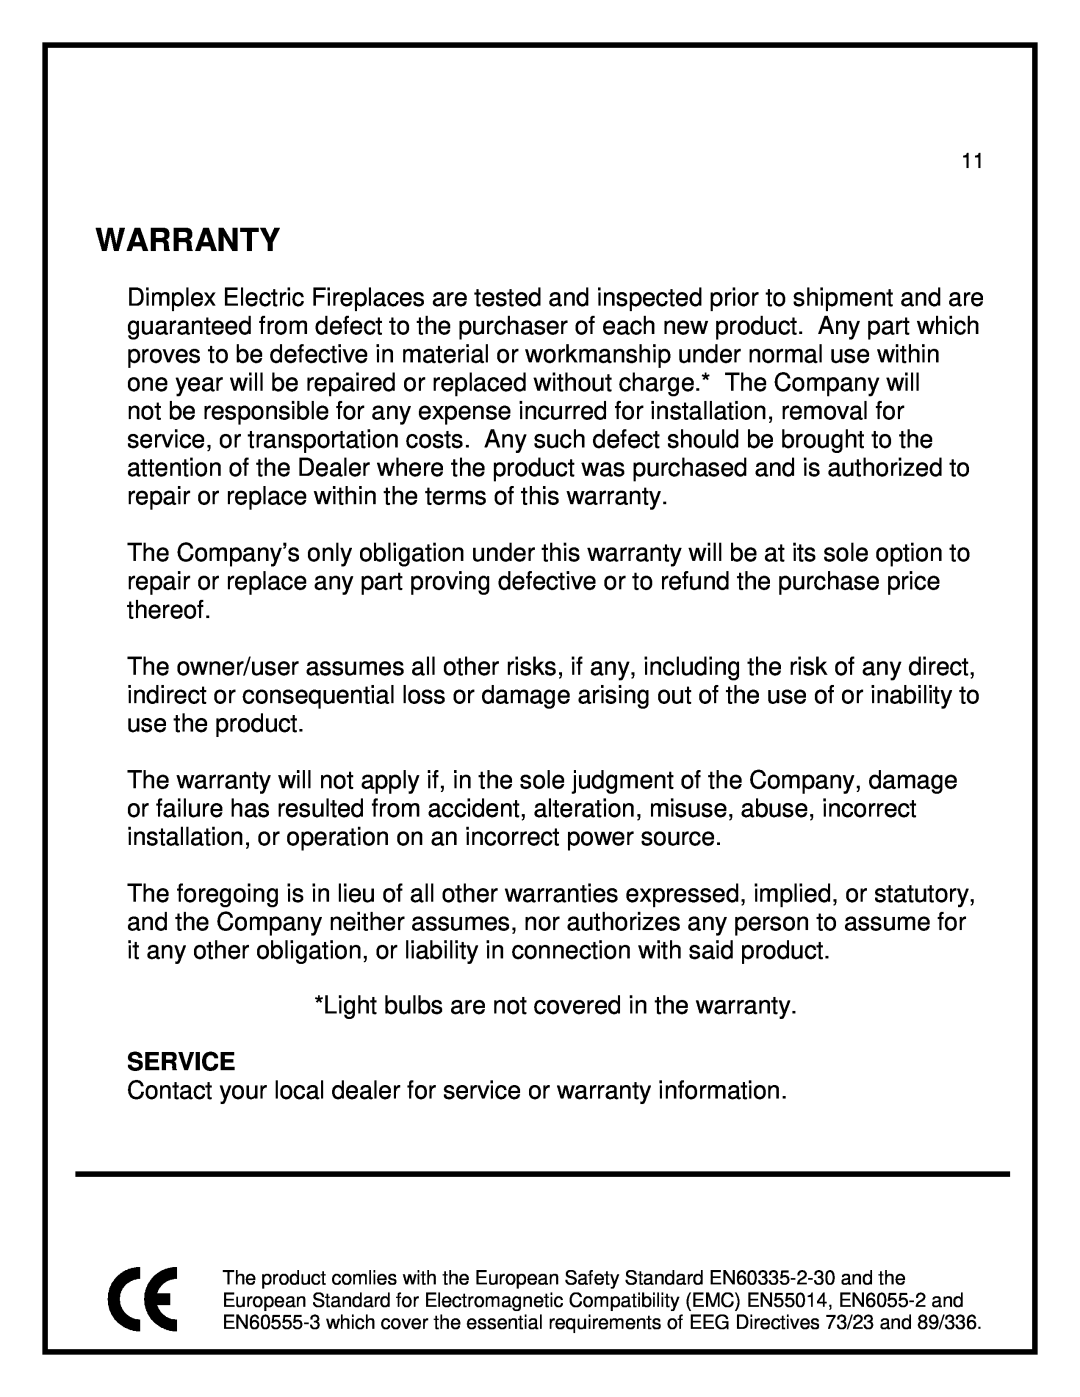 Dimplex EF3003-230 manual Warranty, Service 